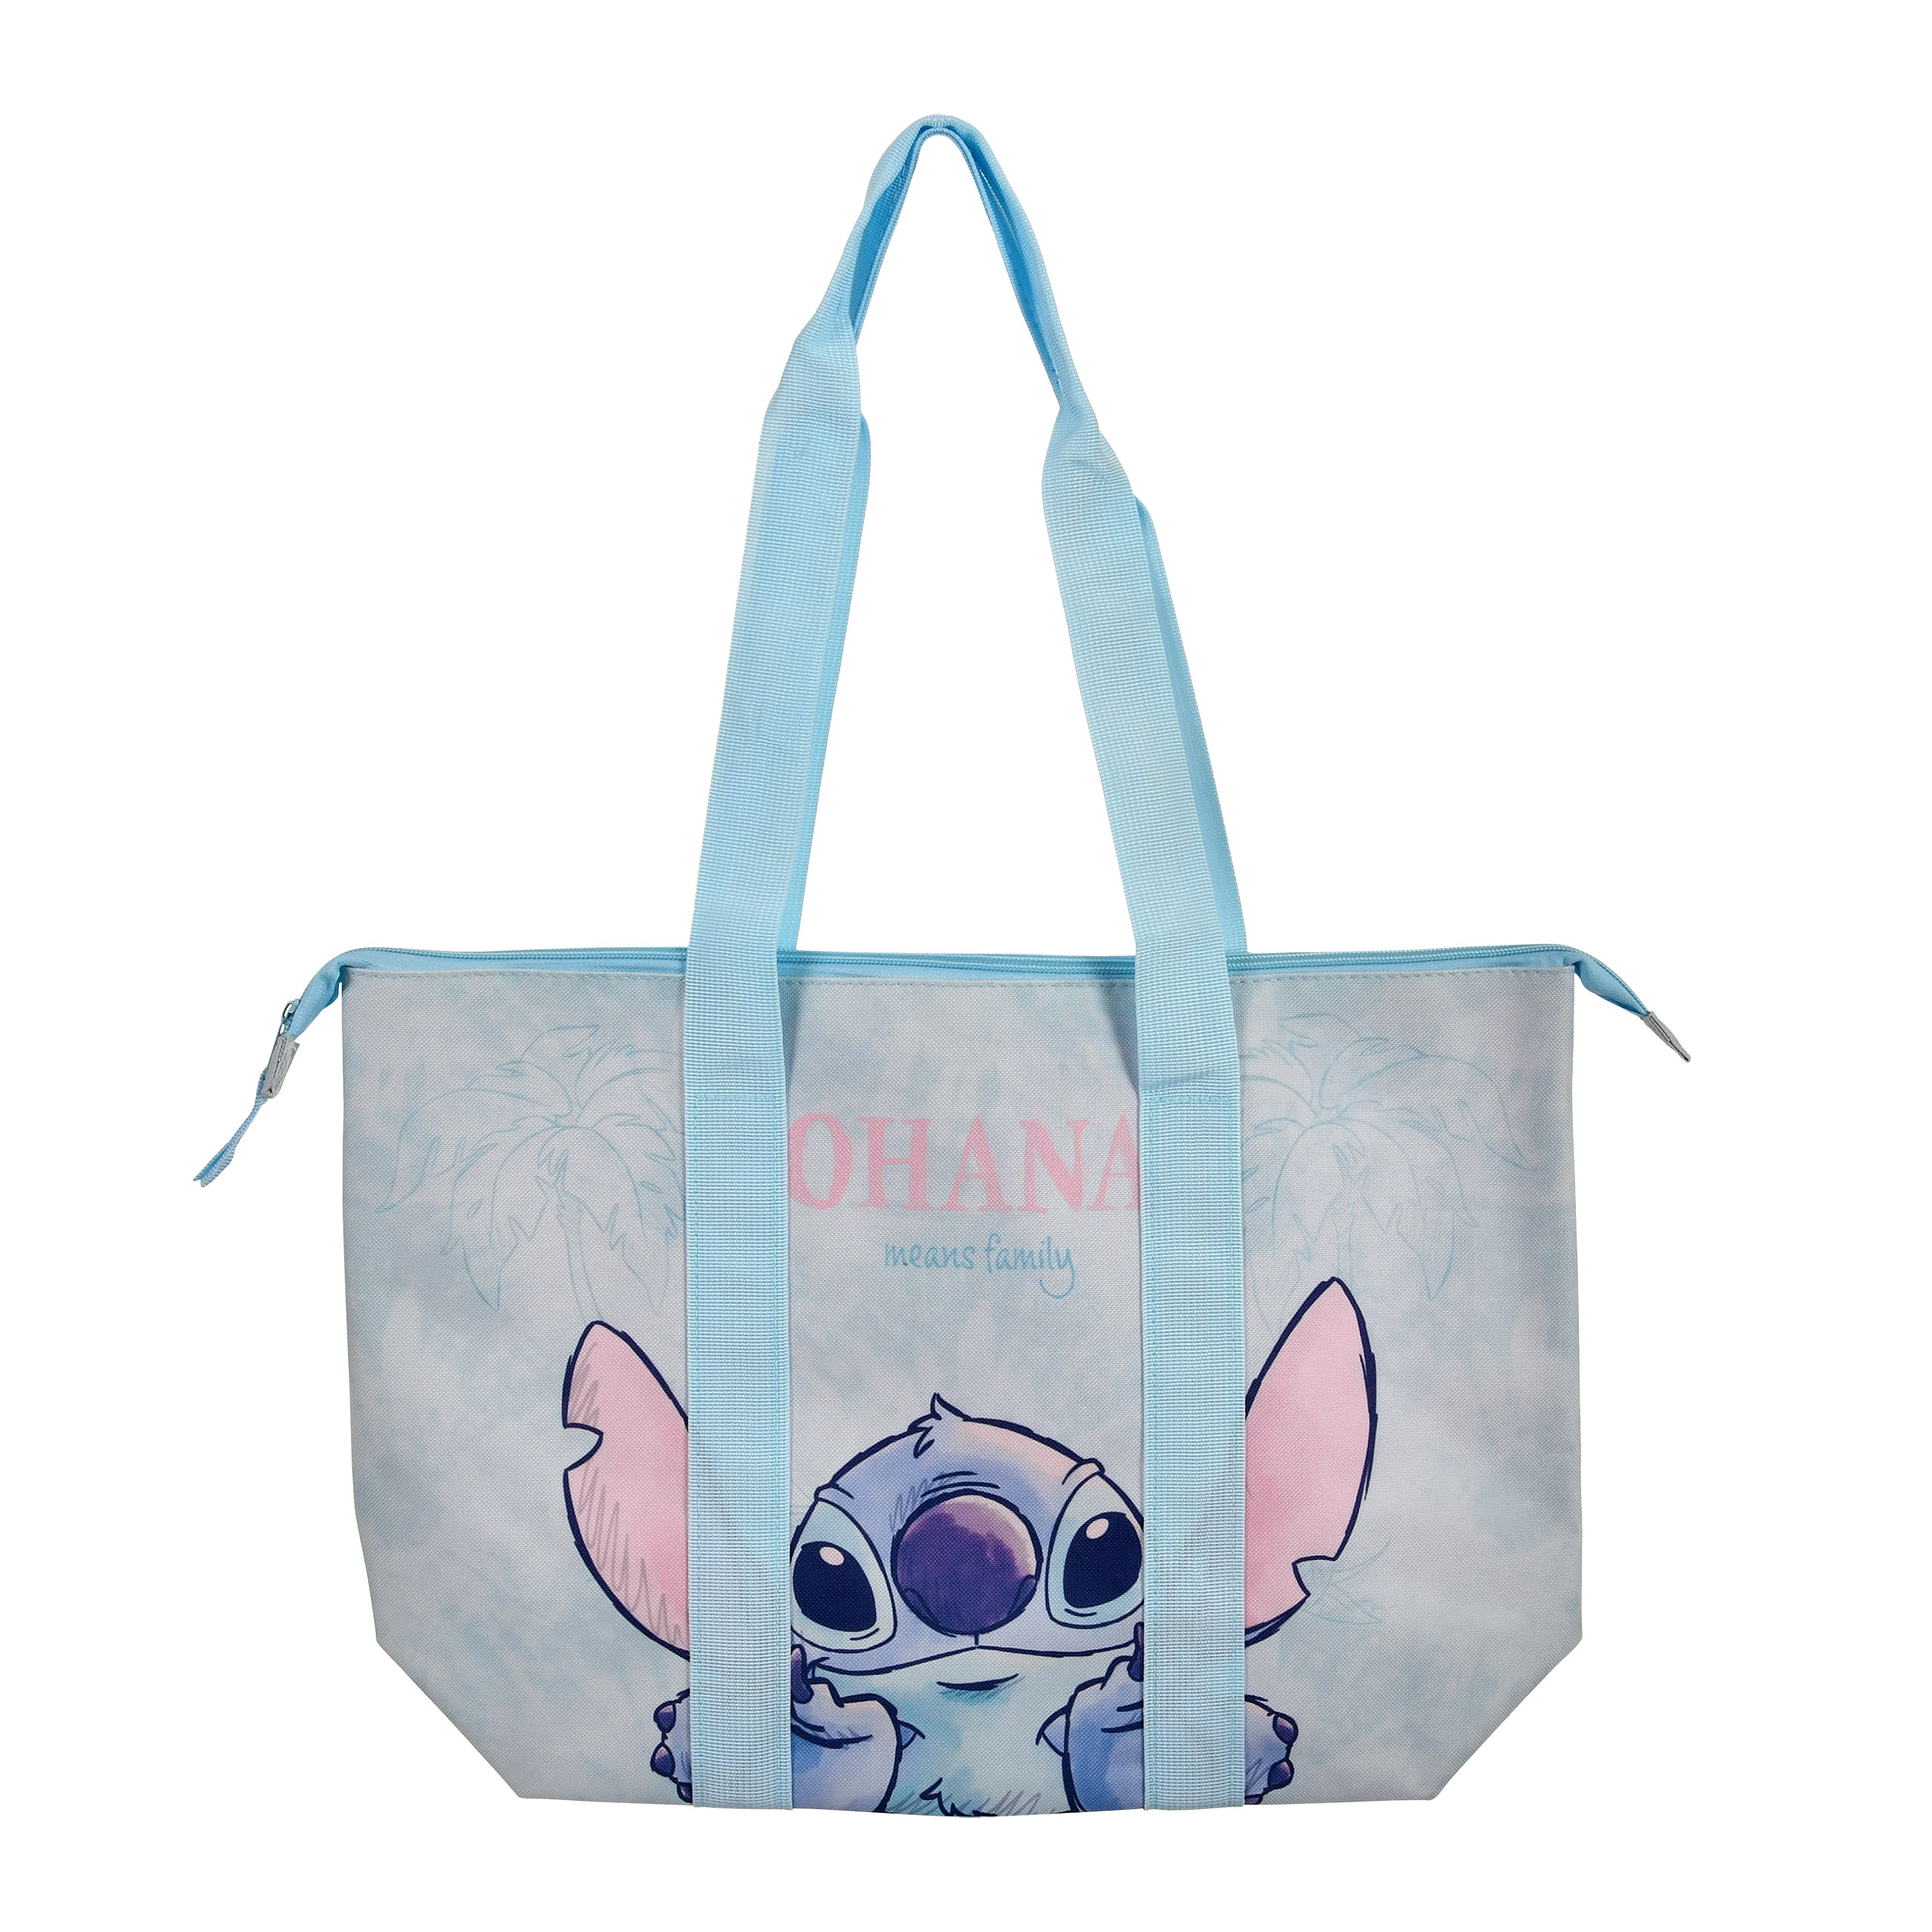 Stitch Ohana Means Family Shopper Bag - Lilo & Stitch